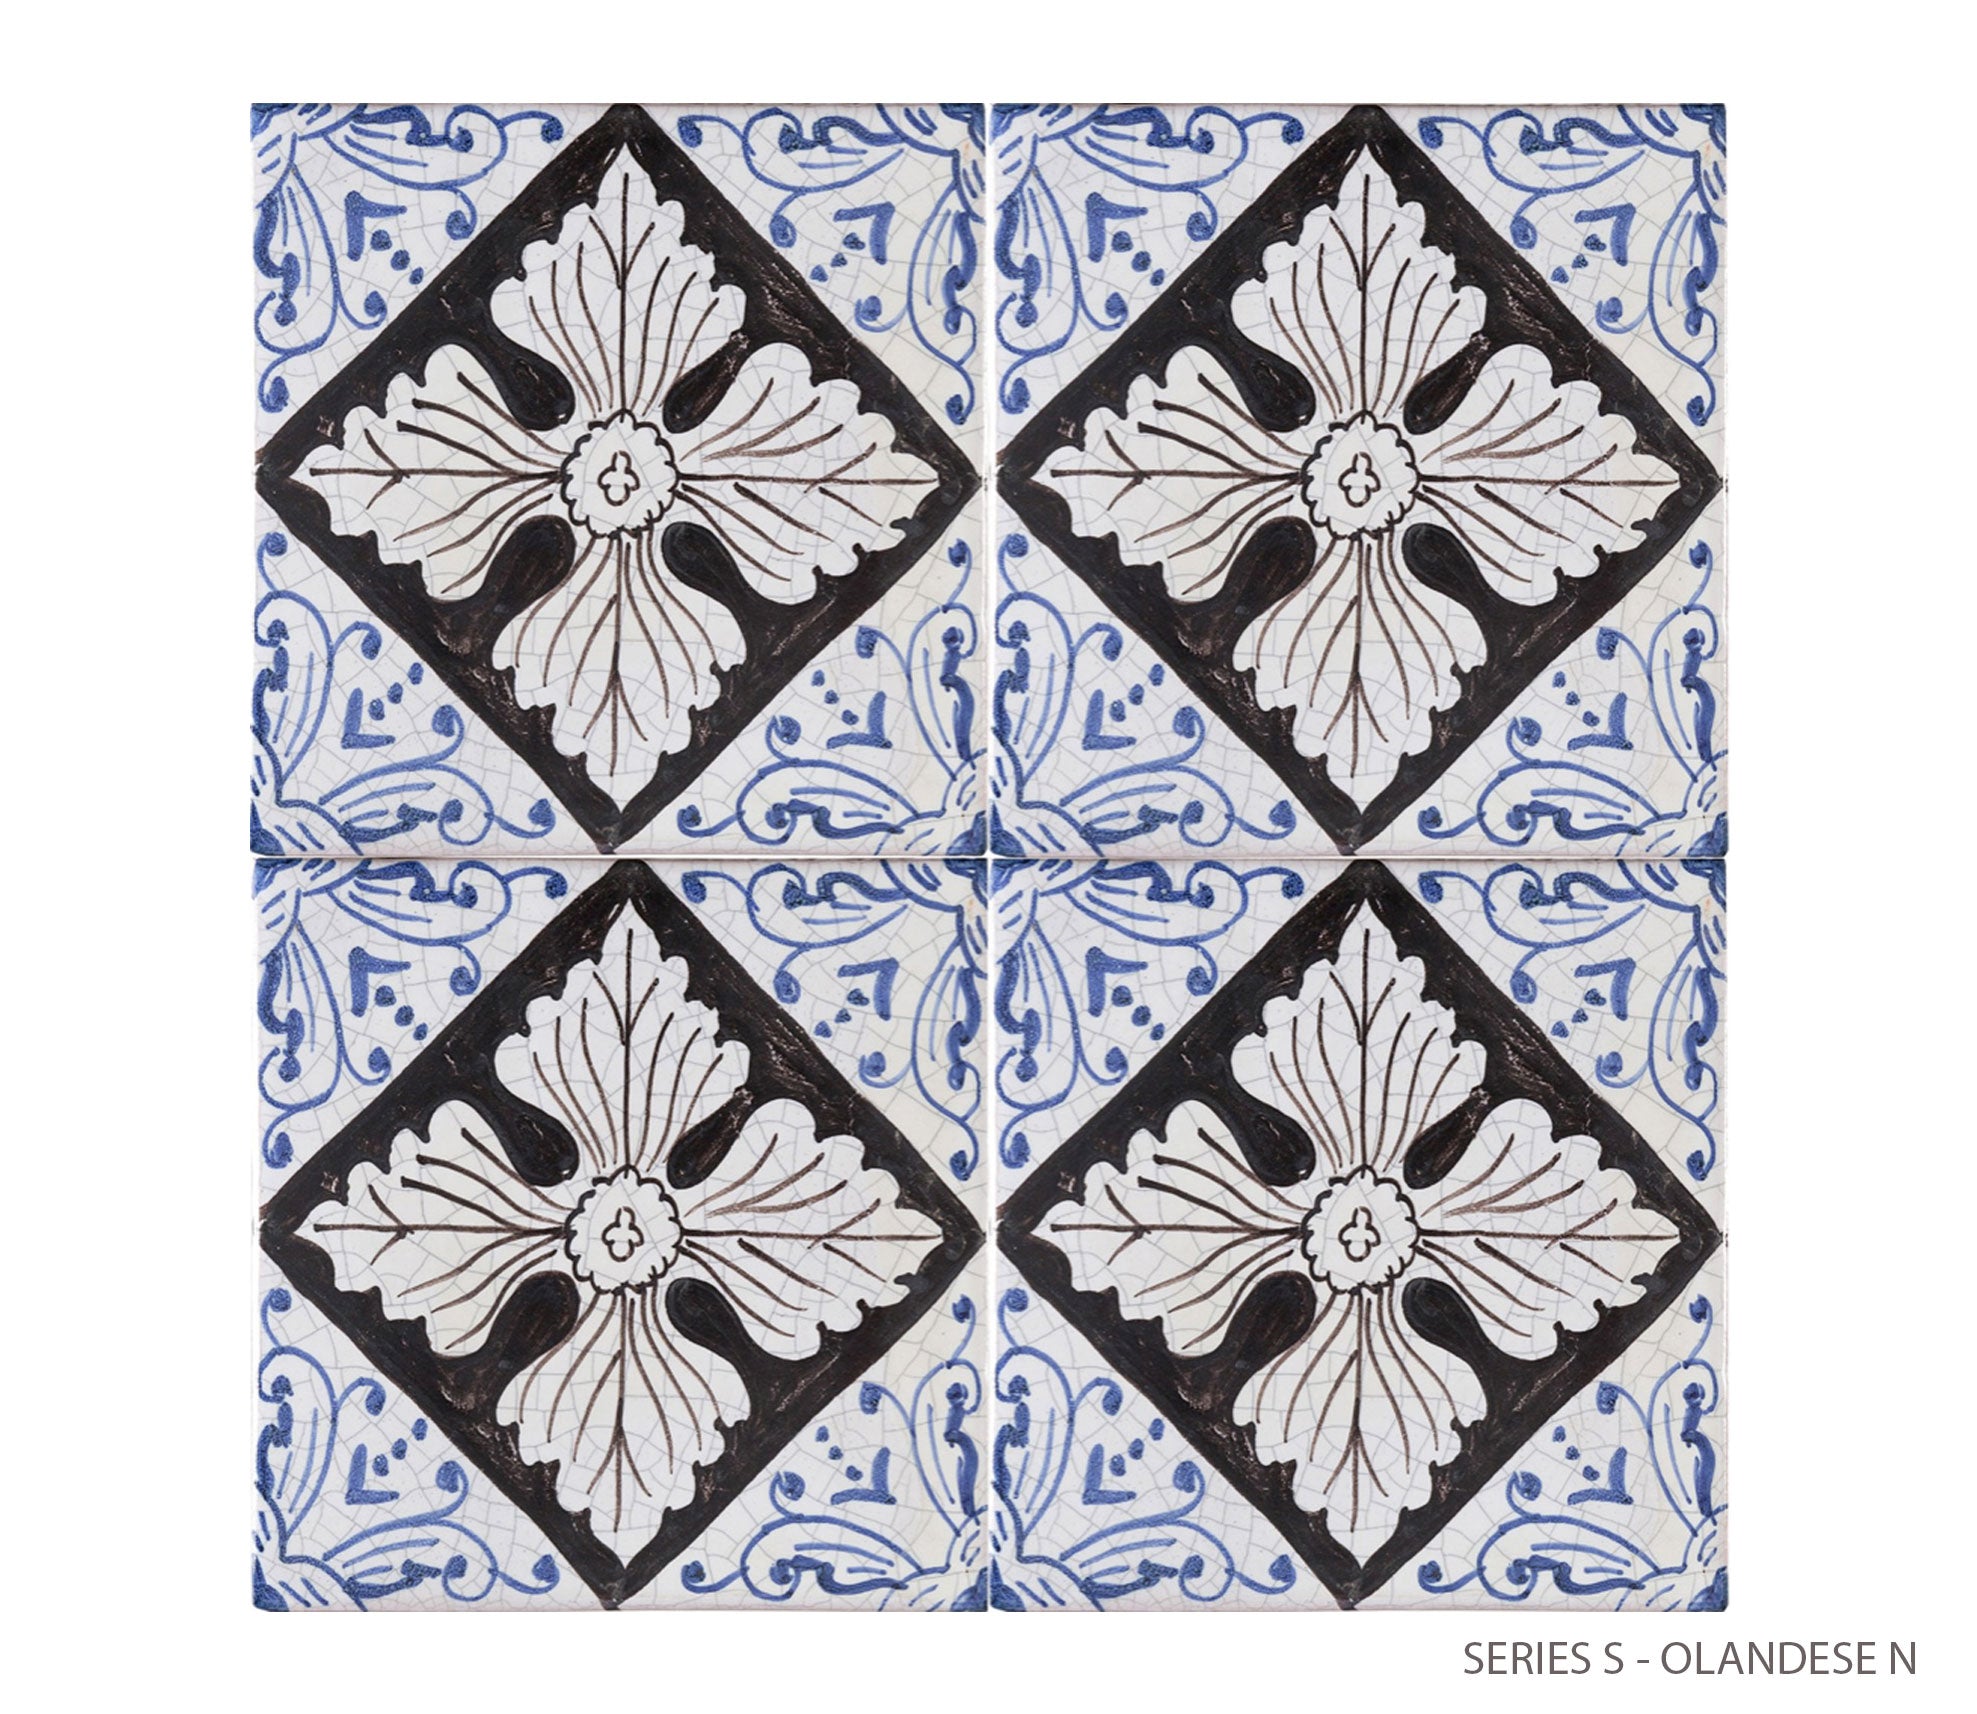 Series S Italian Handpainted Tiles Product Image 17